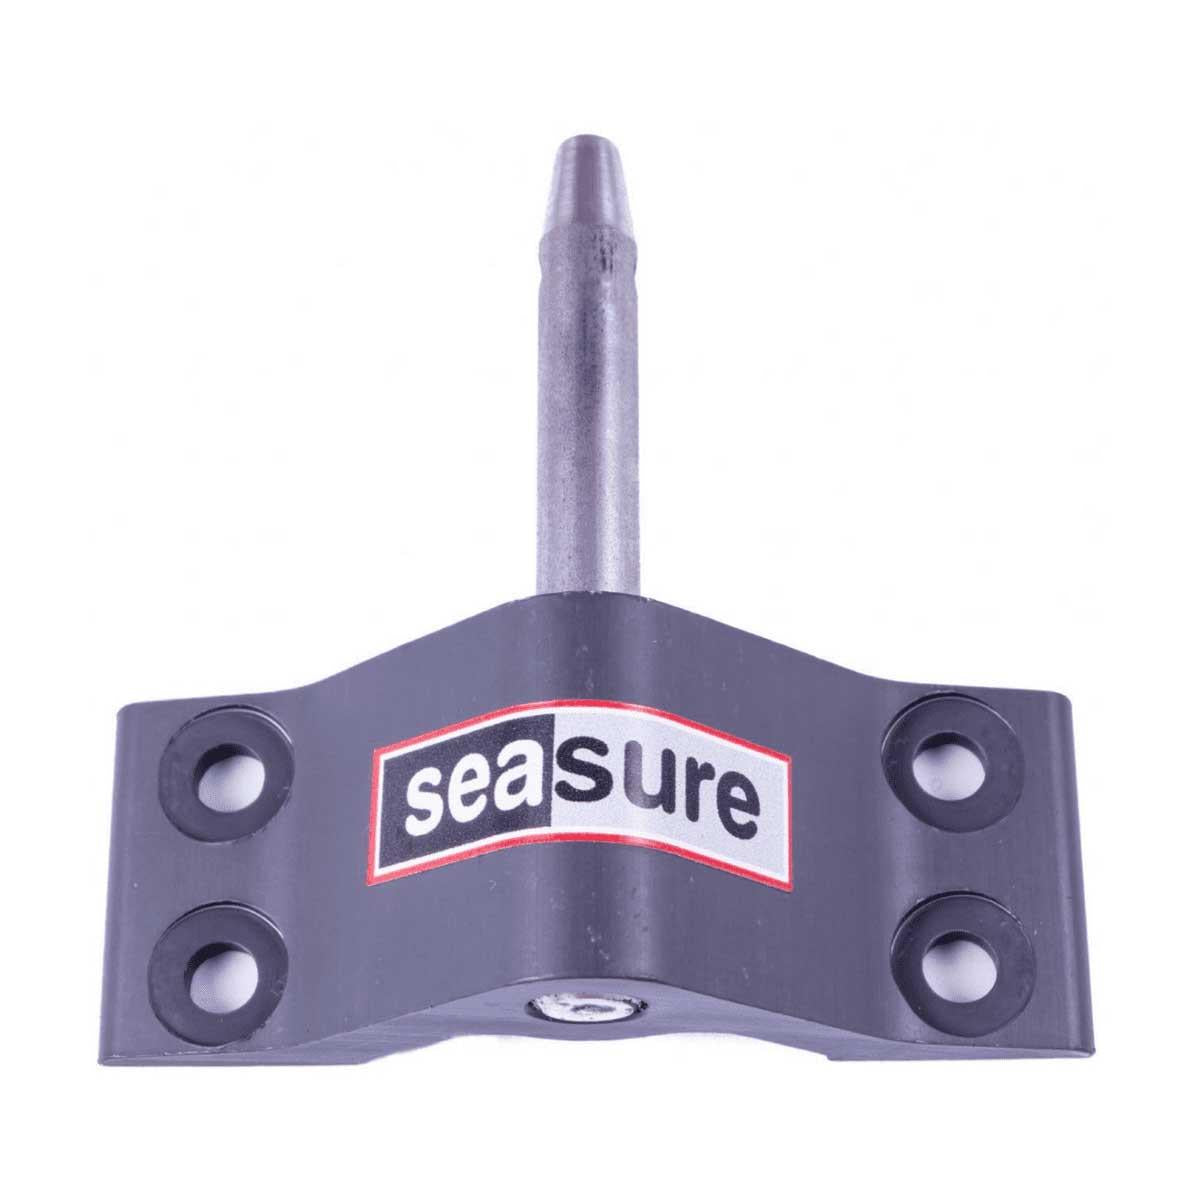 Seasure 4 Hole Transom Pintle - 10mm